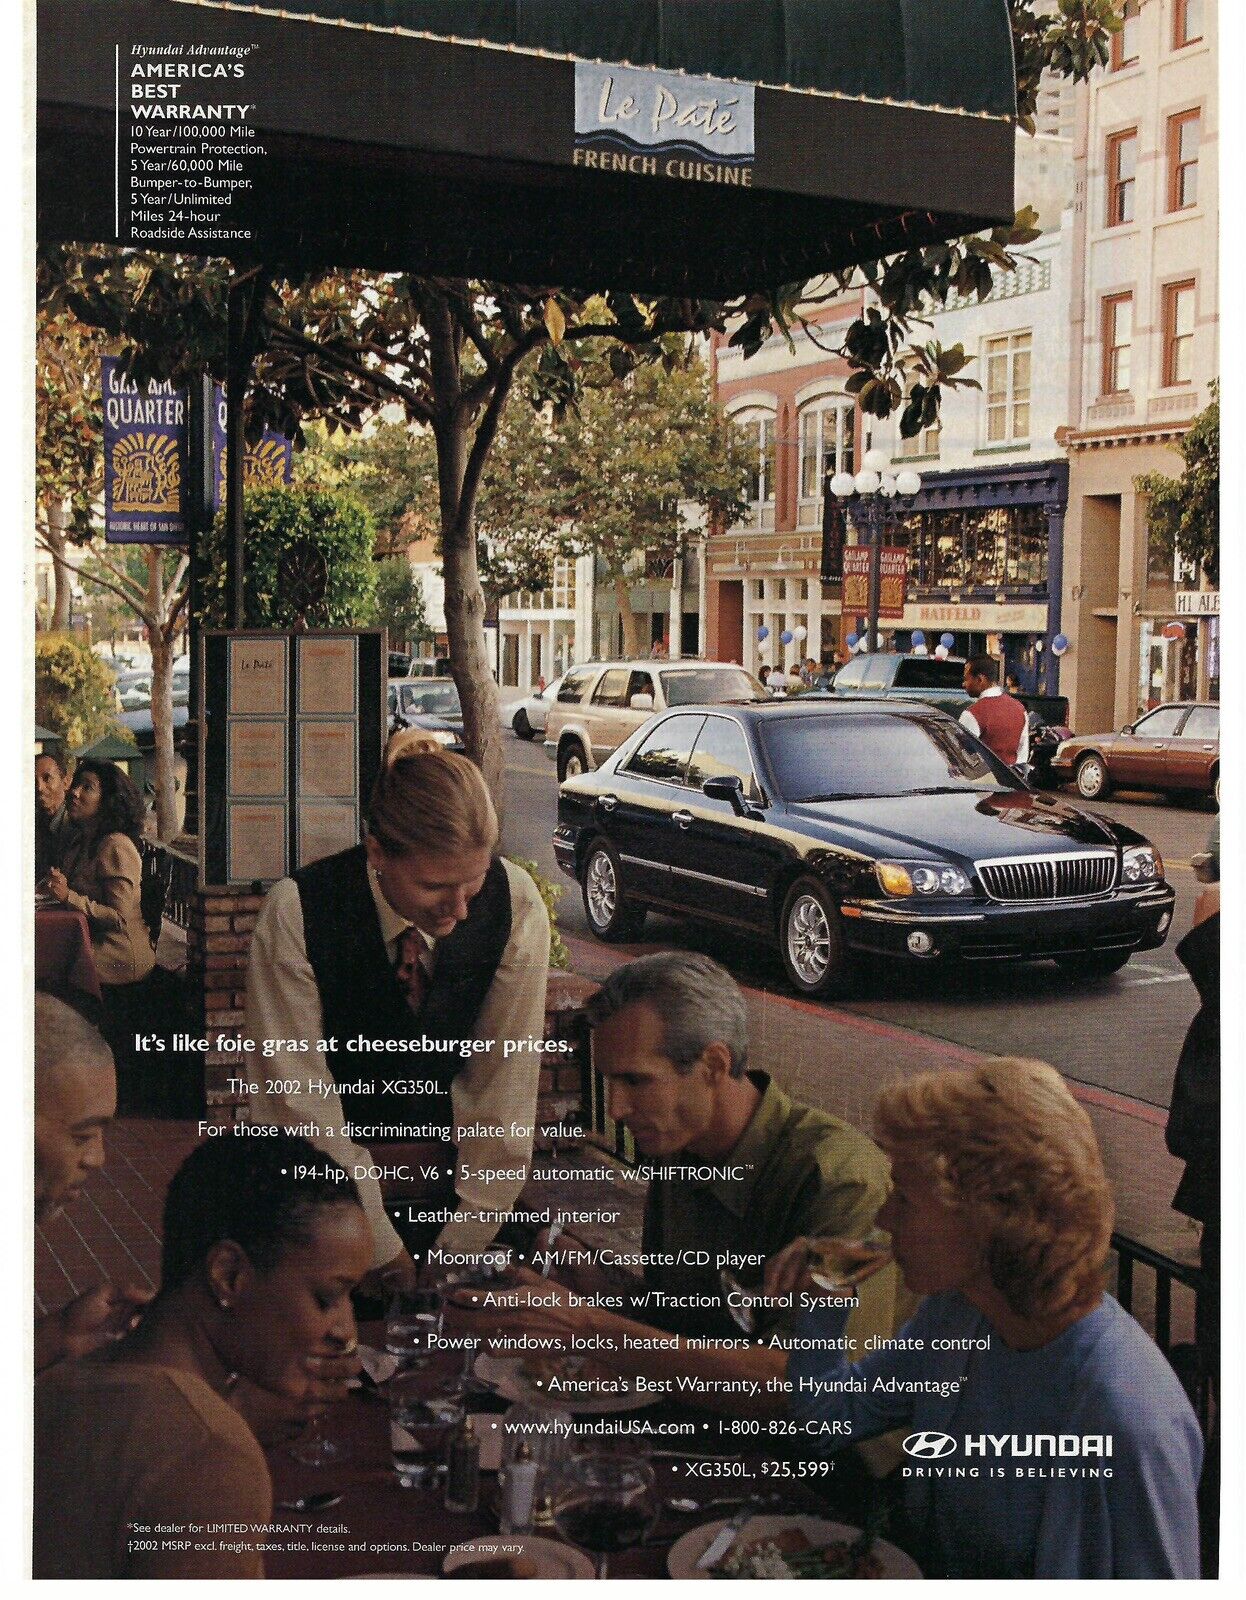 2002 Hyundai XG350L Foie Gras Cheesburger Price Vintage Magazine Print Ad/Poster